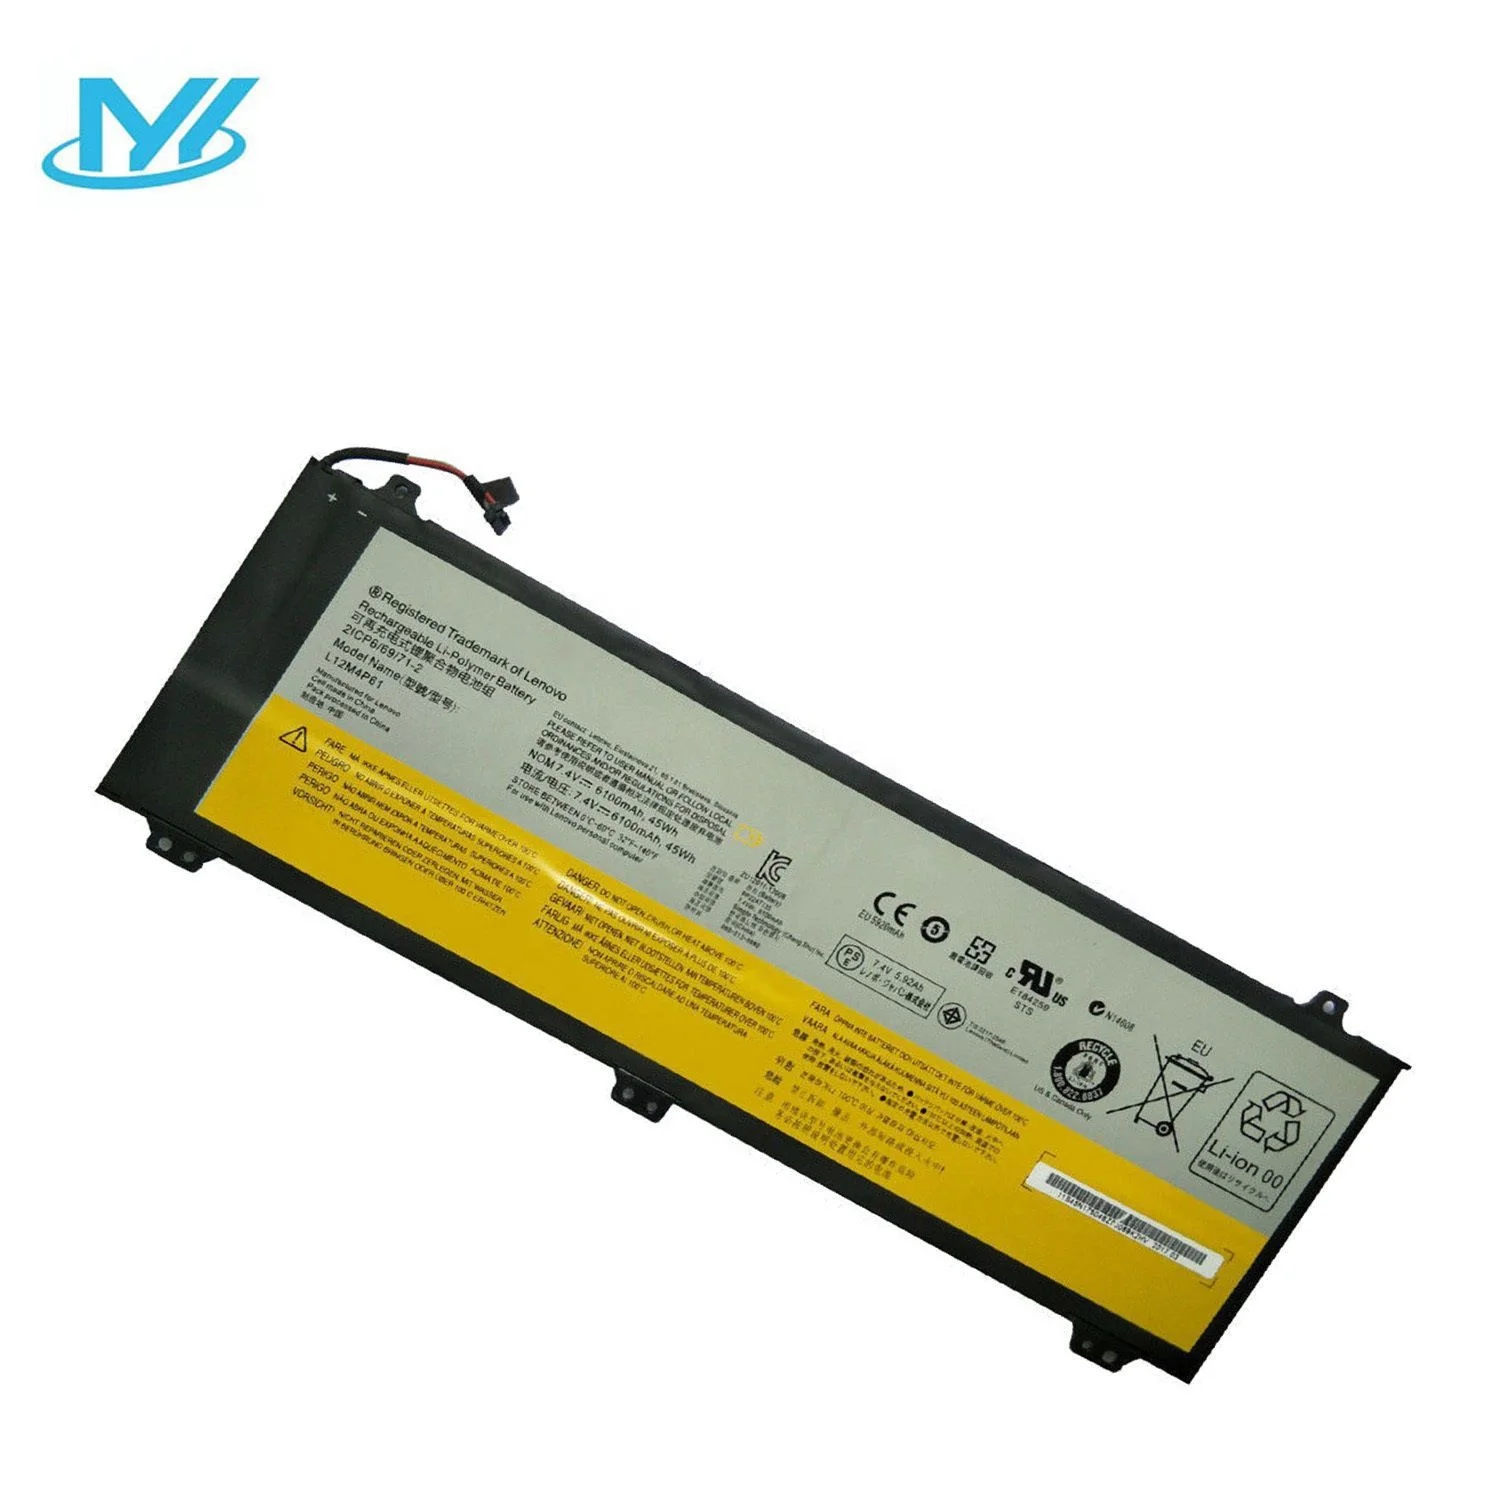 

MYiYA Laptop Battery 4cell rechargeable laptop battery L12M4P61 for Lenovo IdeaPad U430p U430 Touch U330